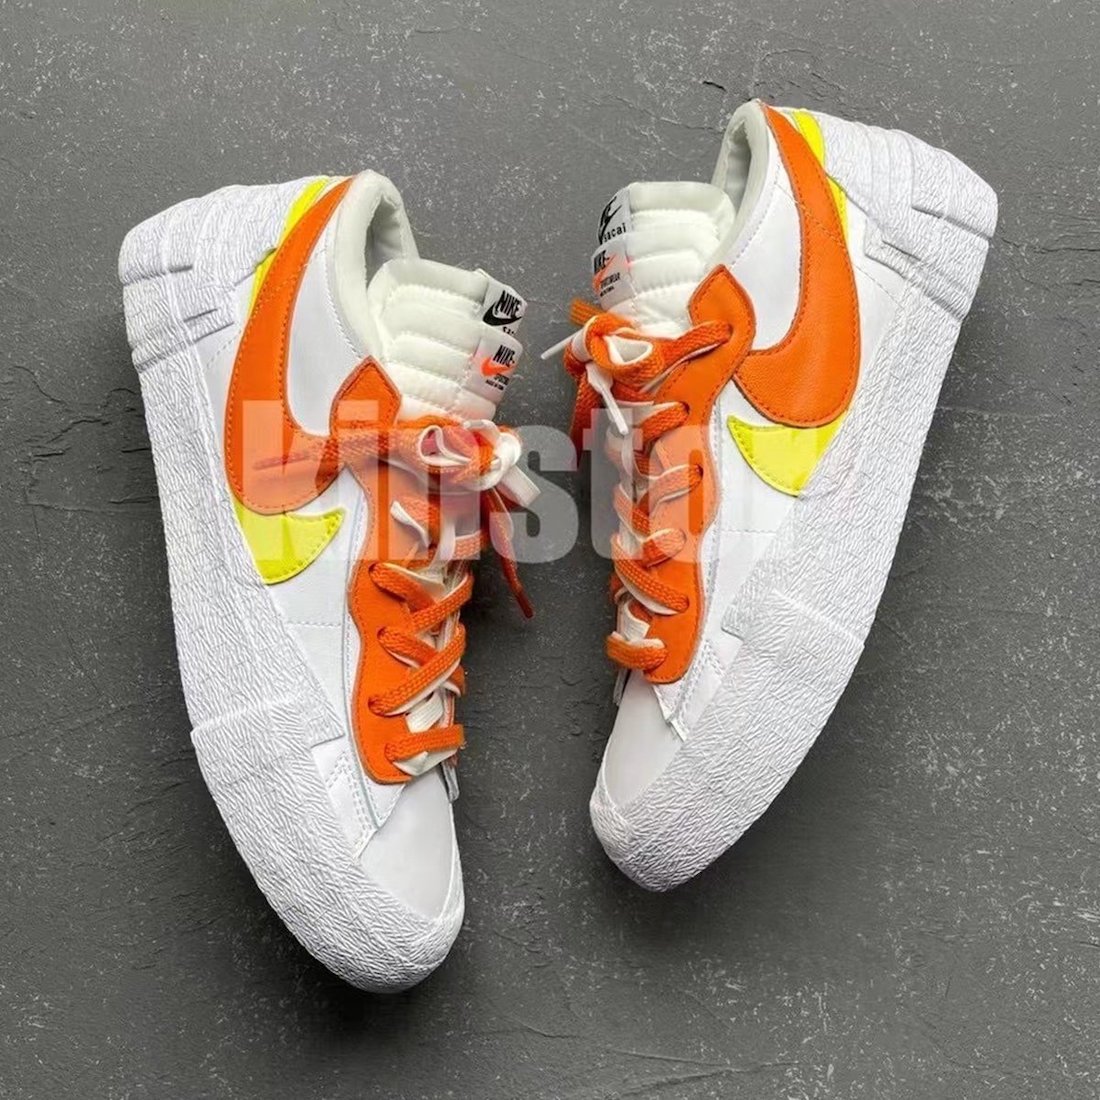 Sacai Nike Blazer Low Magma Orange DD1877-100 Release Price